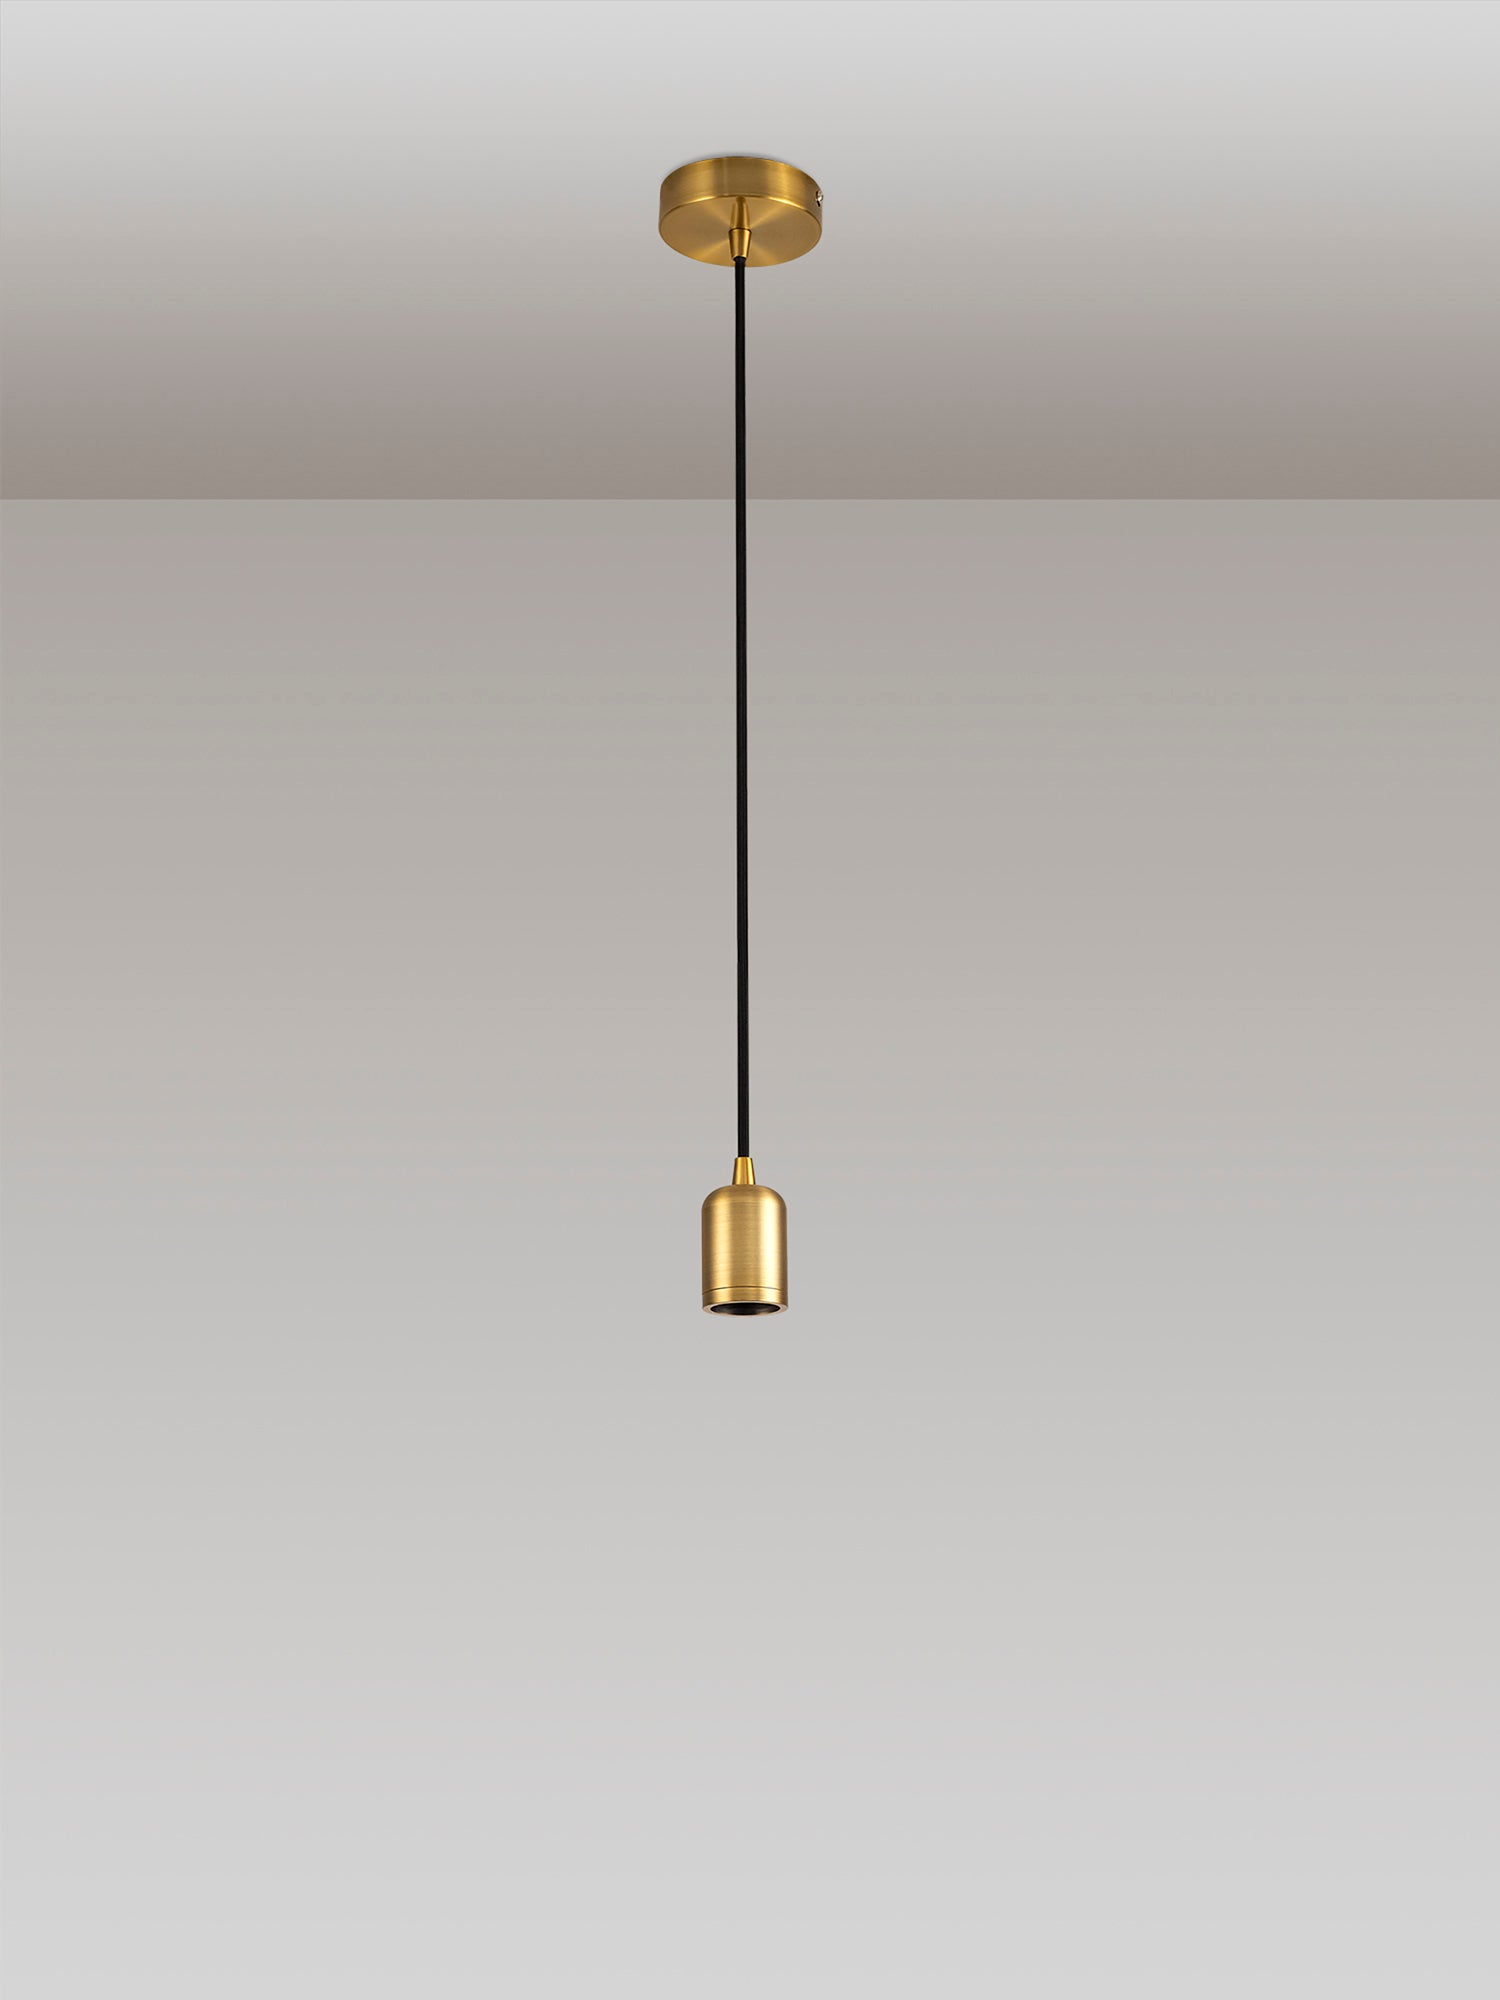 Arpeta 1m Suspension Kit 1 Light Gilt Bronze/Black Braided Cable, E27 Max 60W, c/w Ceiling Bracket